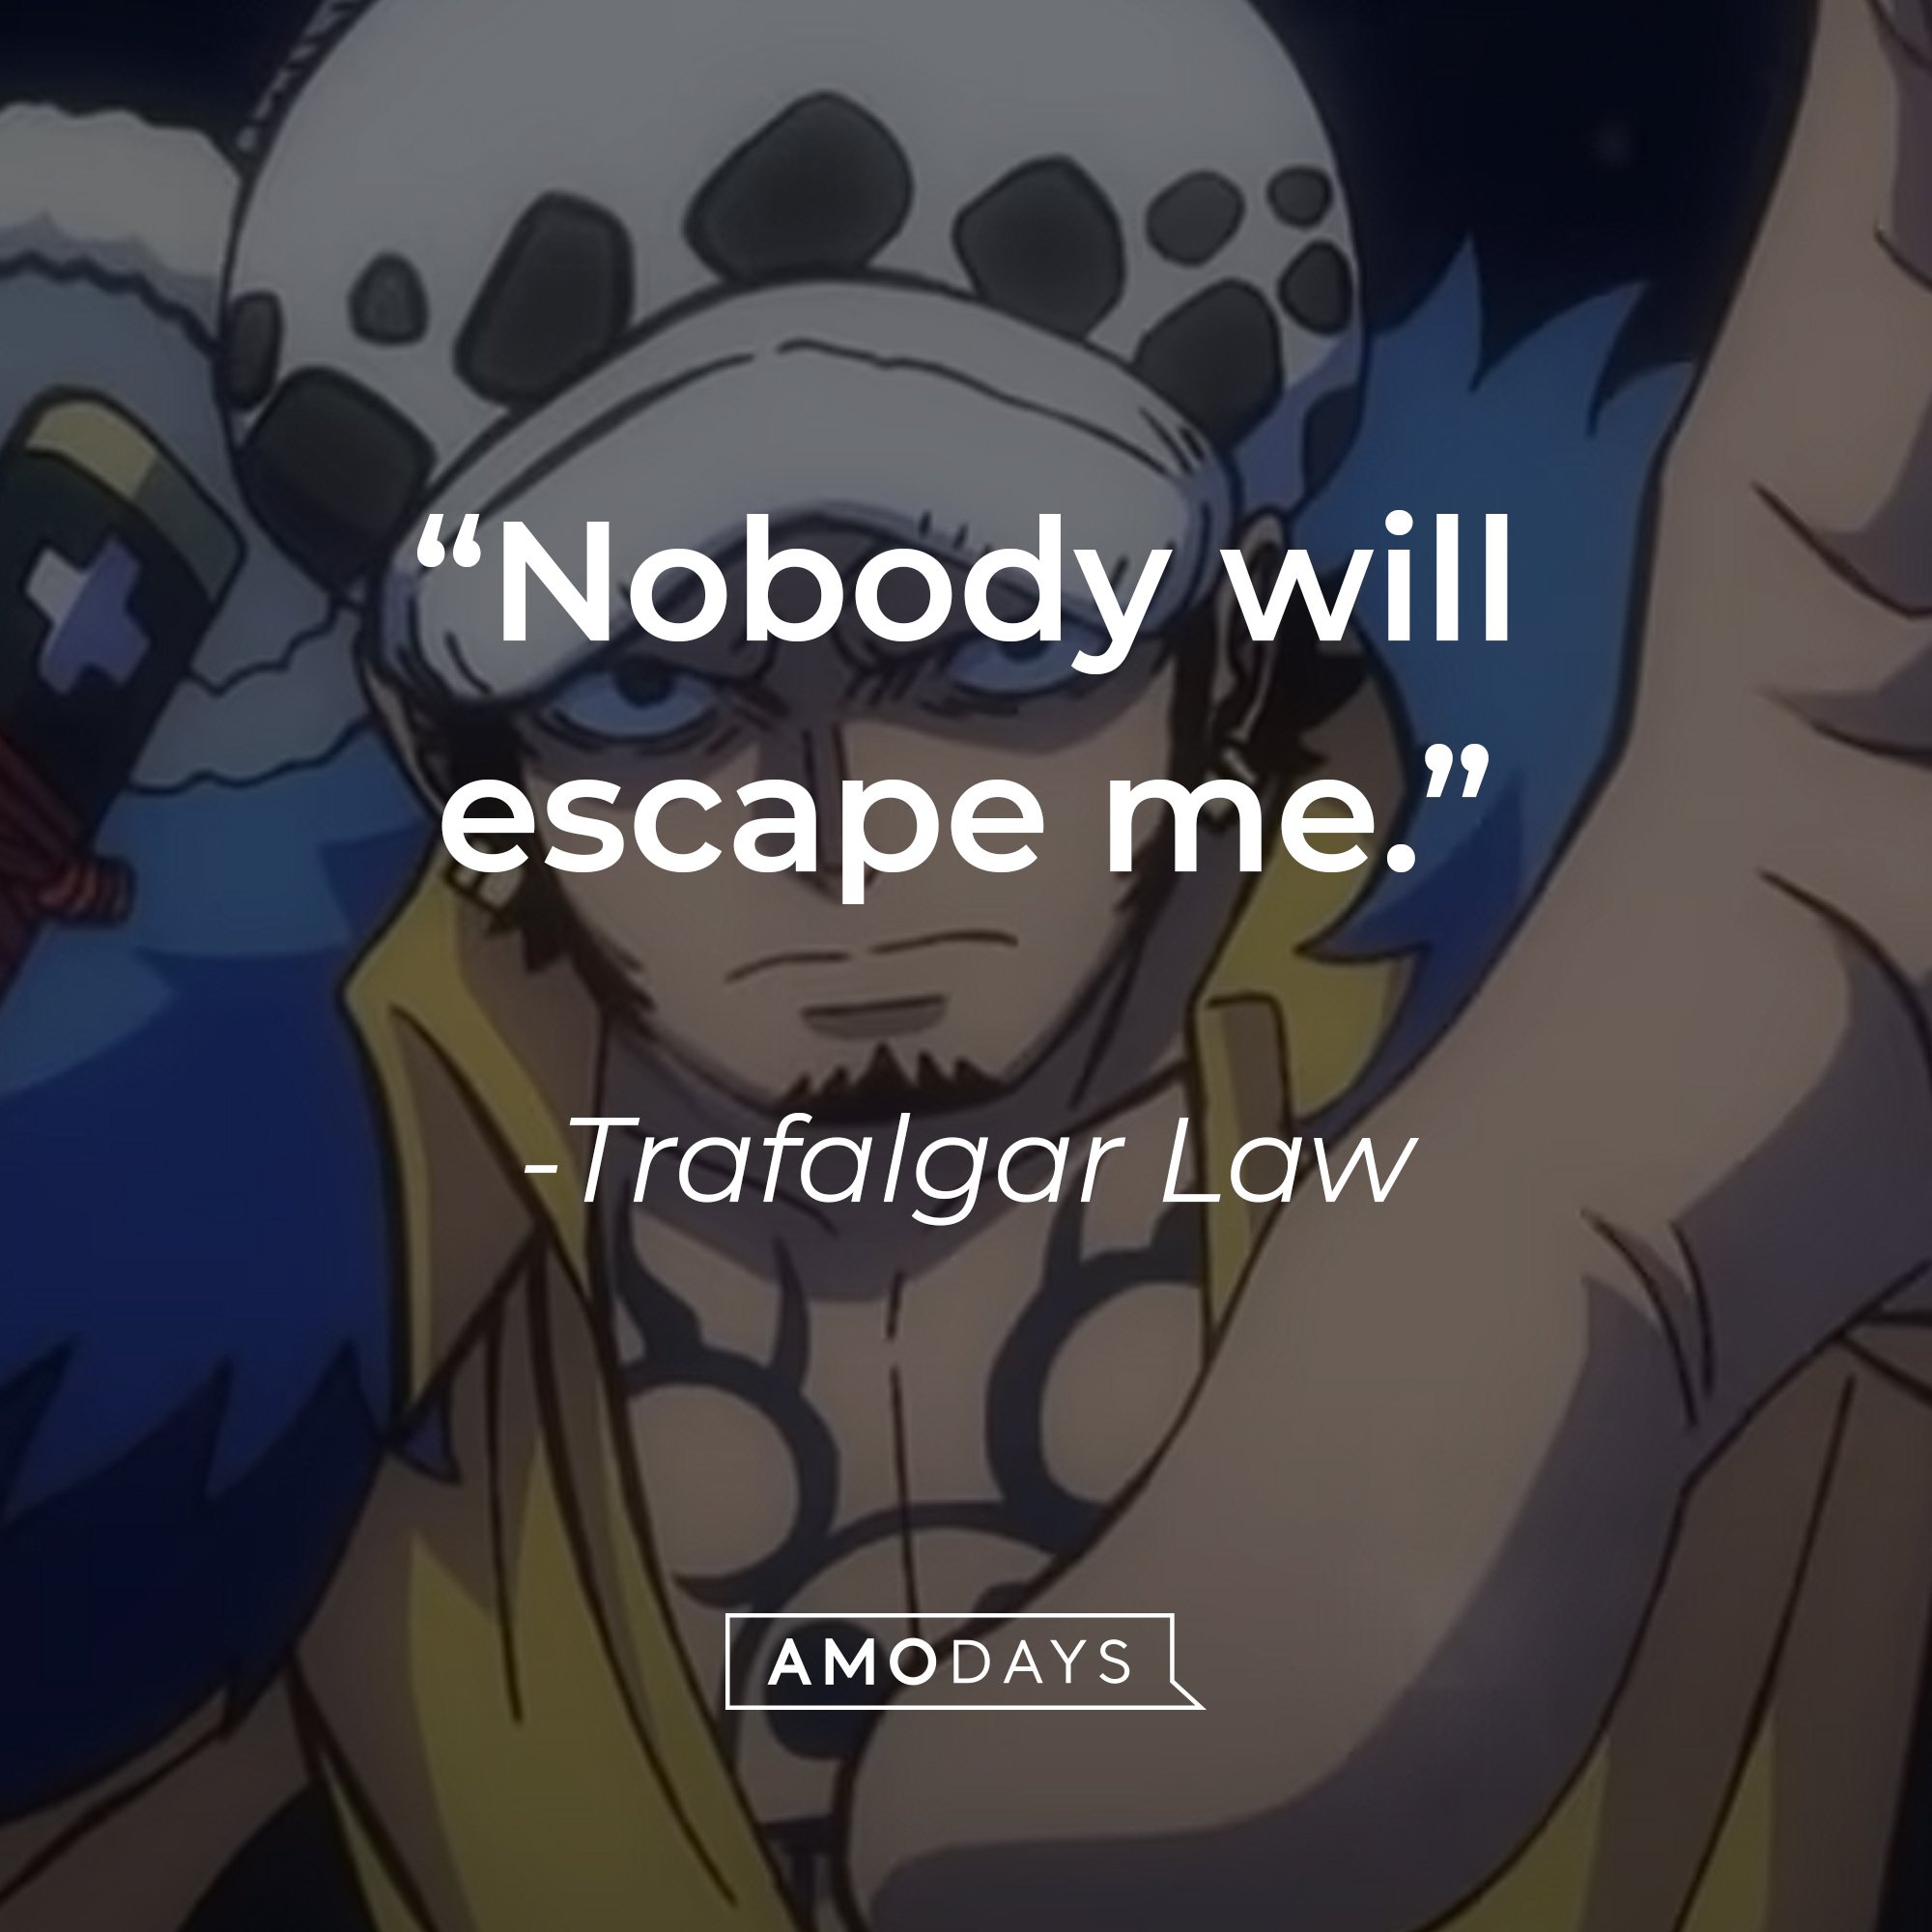 Trafalgar Law’s quote: "Nobody will escape me." | Image: AmoDays